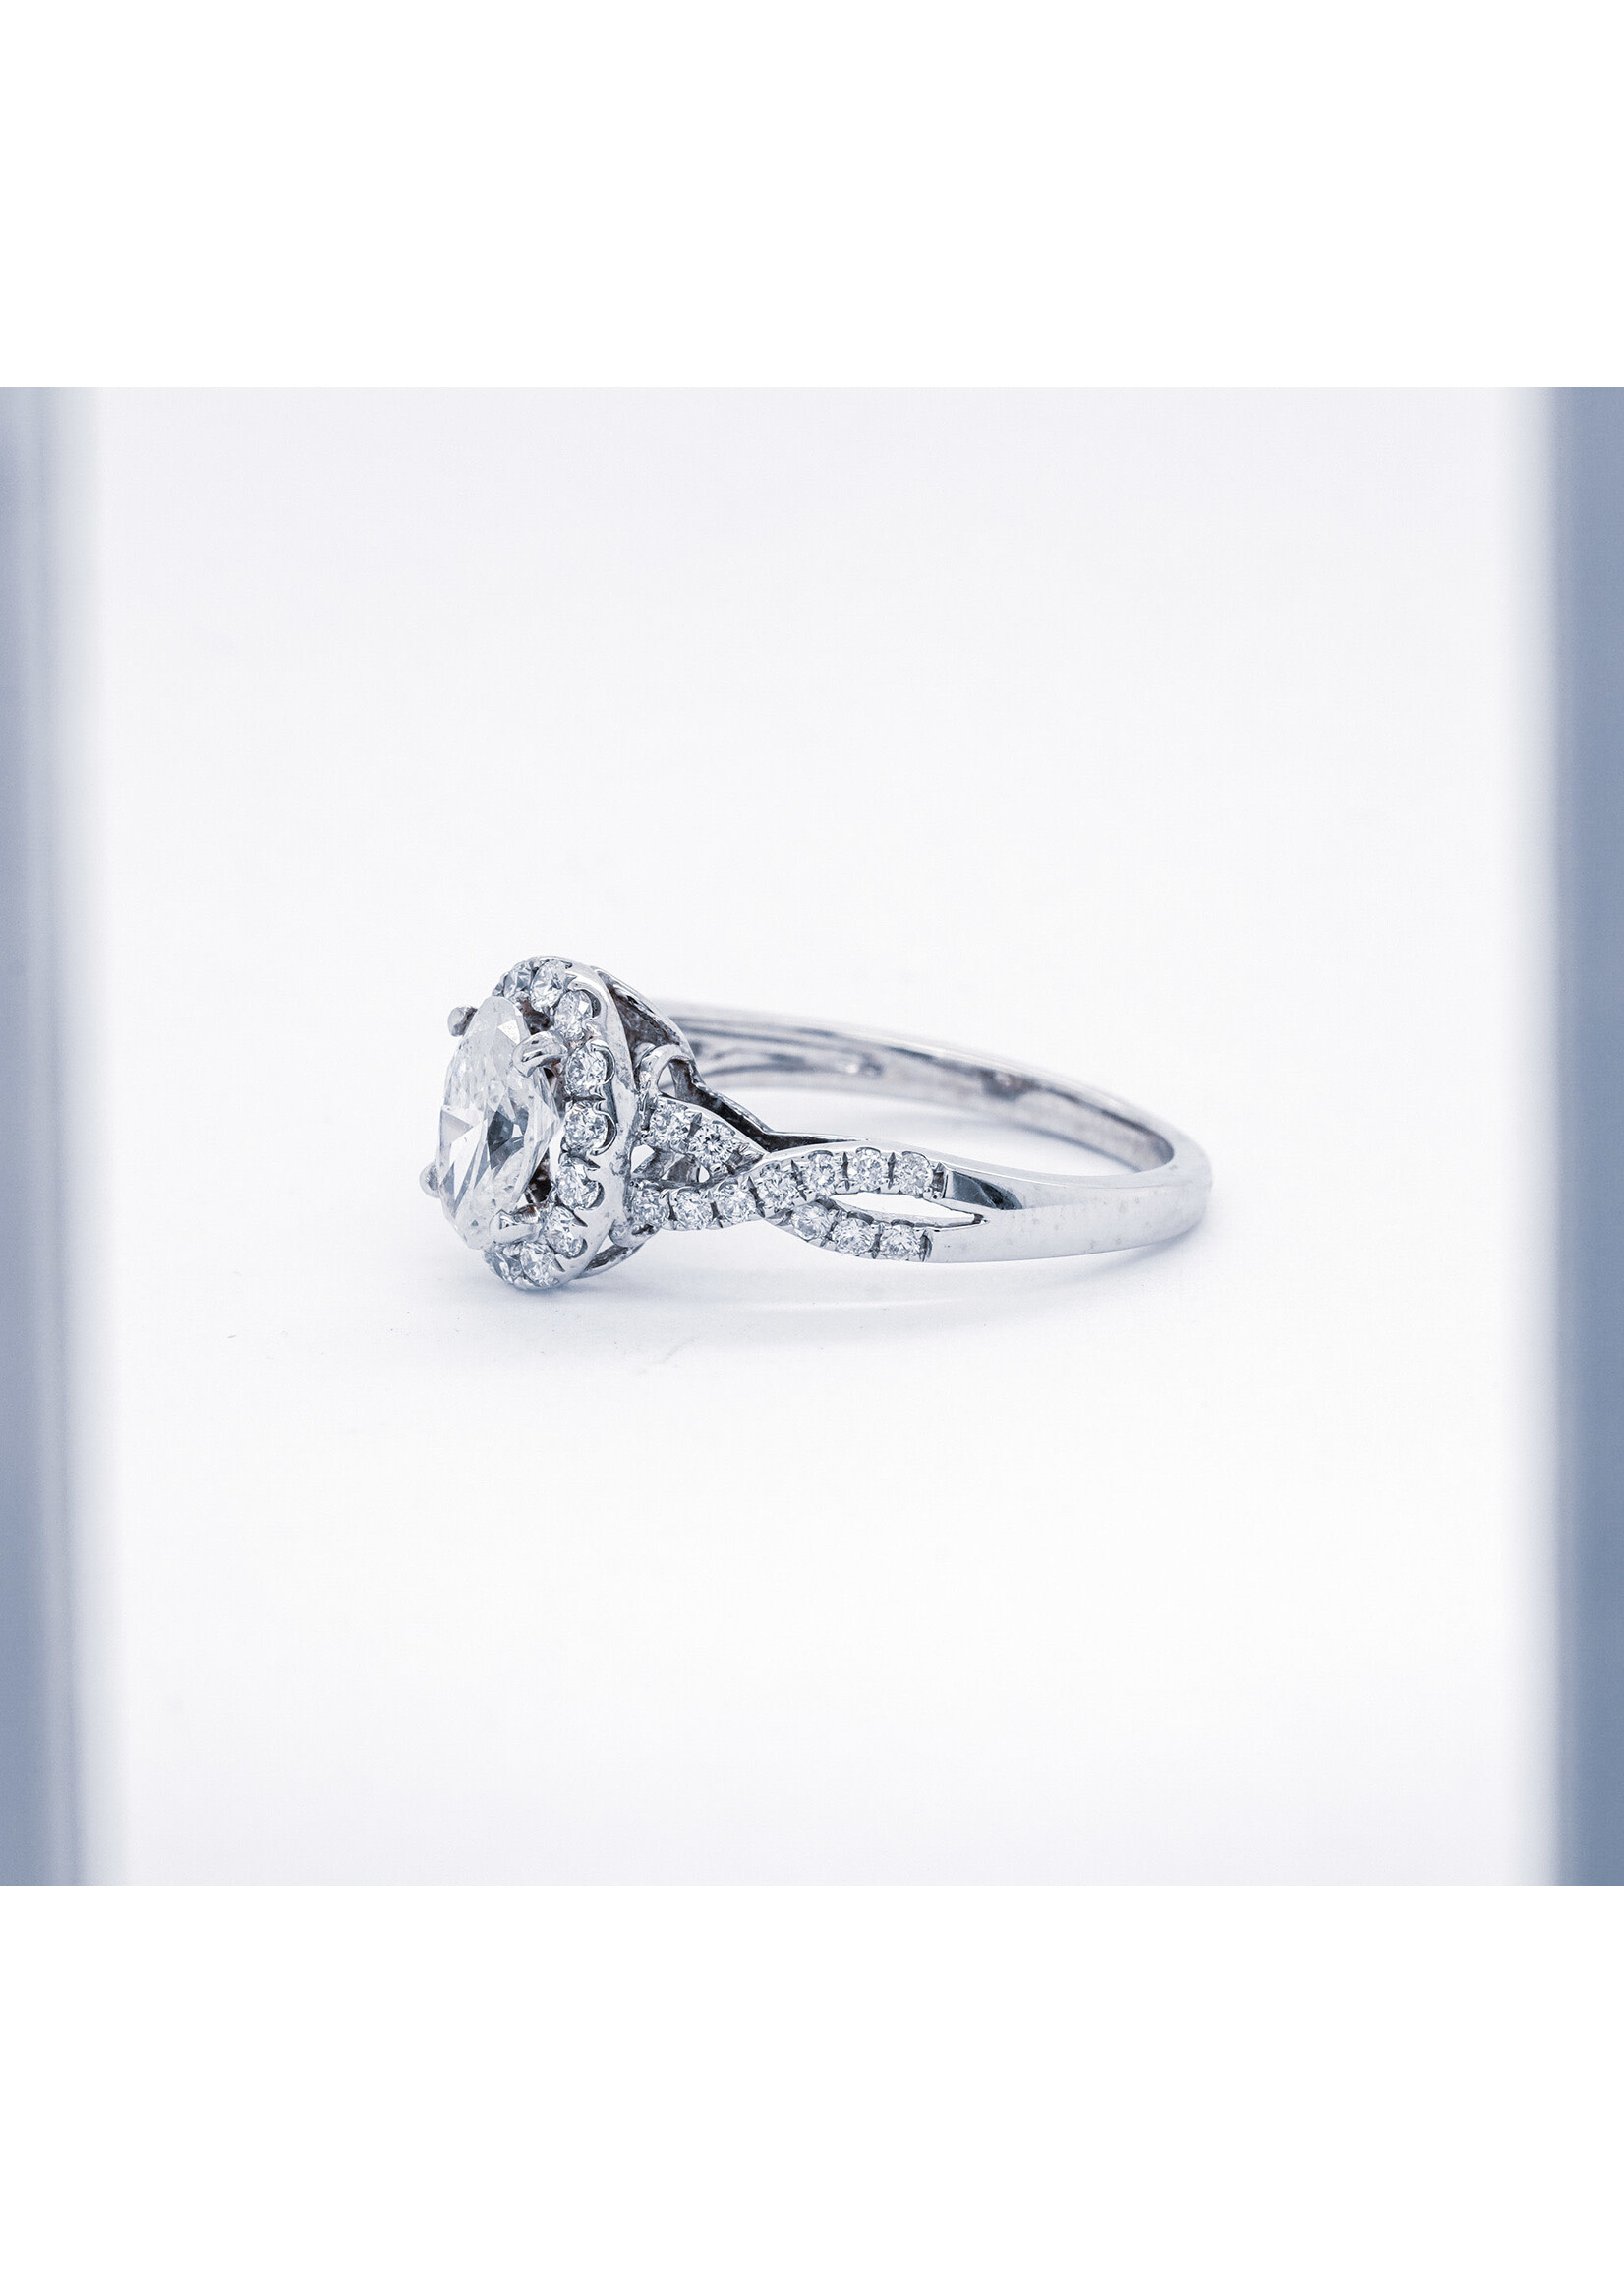 14KW 3.33g 1.40TW (.90ctr)  E/I1Oval Diamond Halo Engagement Ring (size 7)